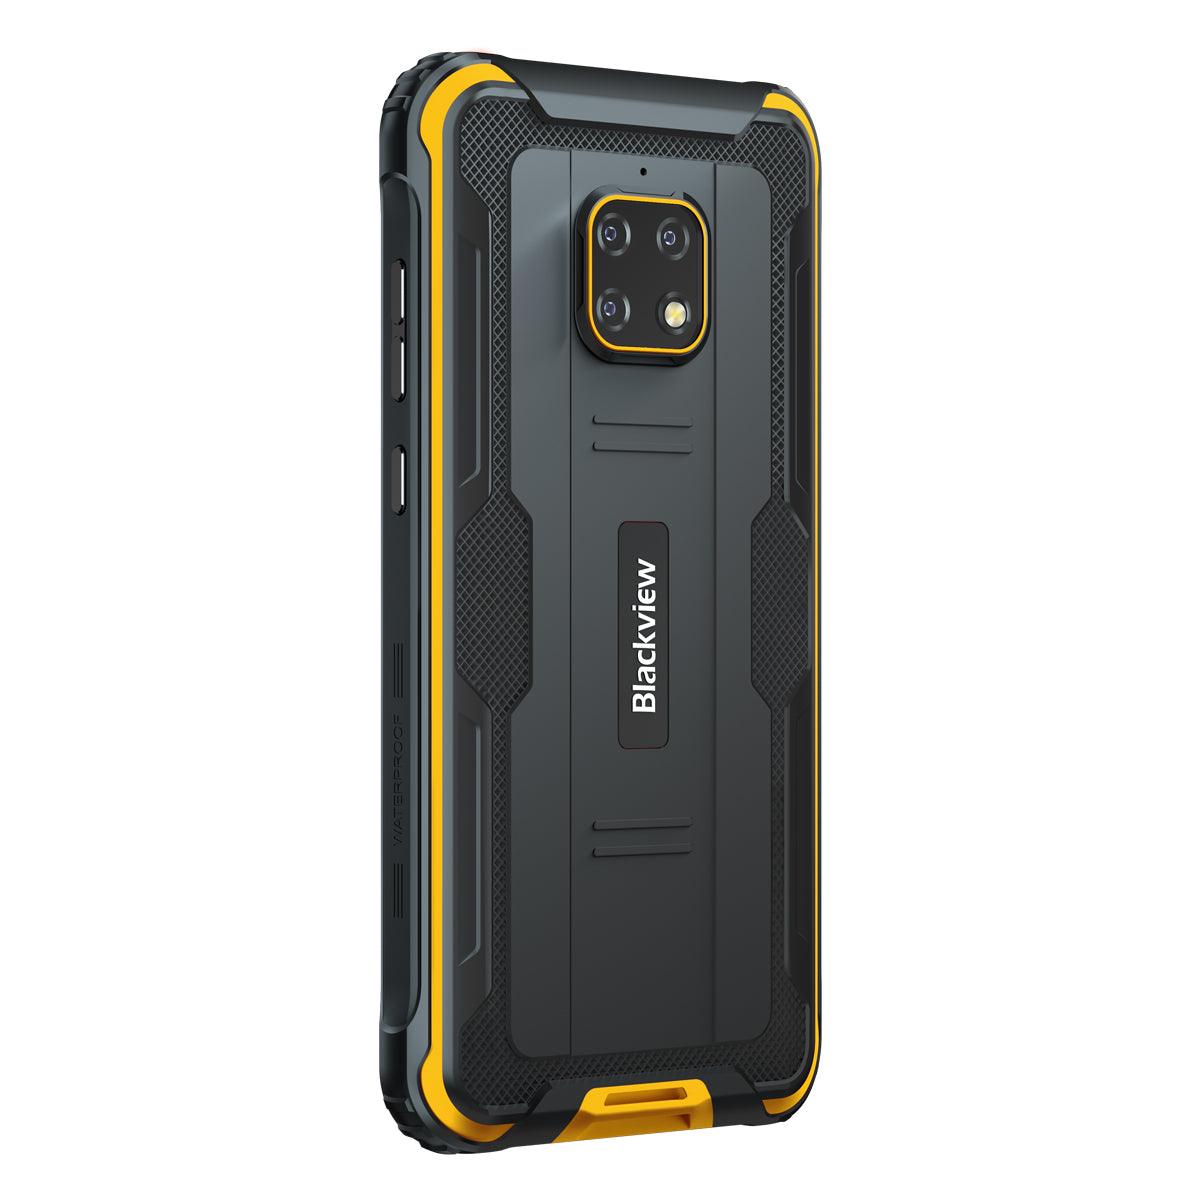 Blackview BV4900 Pro 5580mAh 4G Ruggedized IP68 Waterproof Smartphone